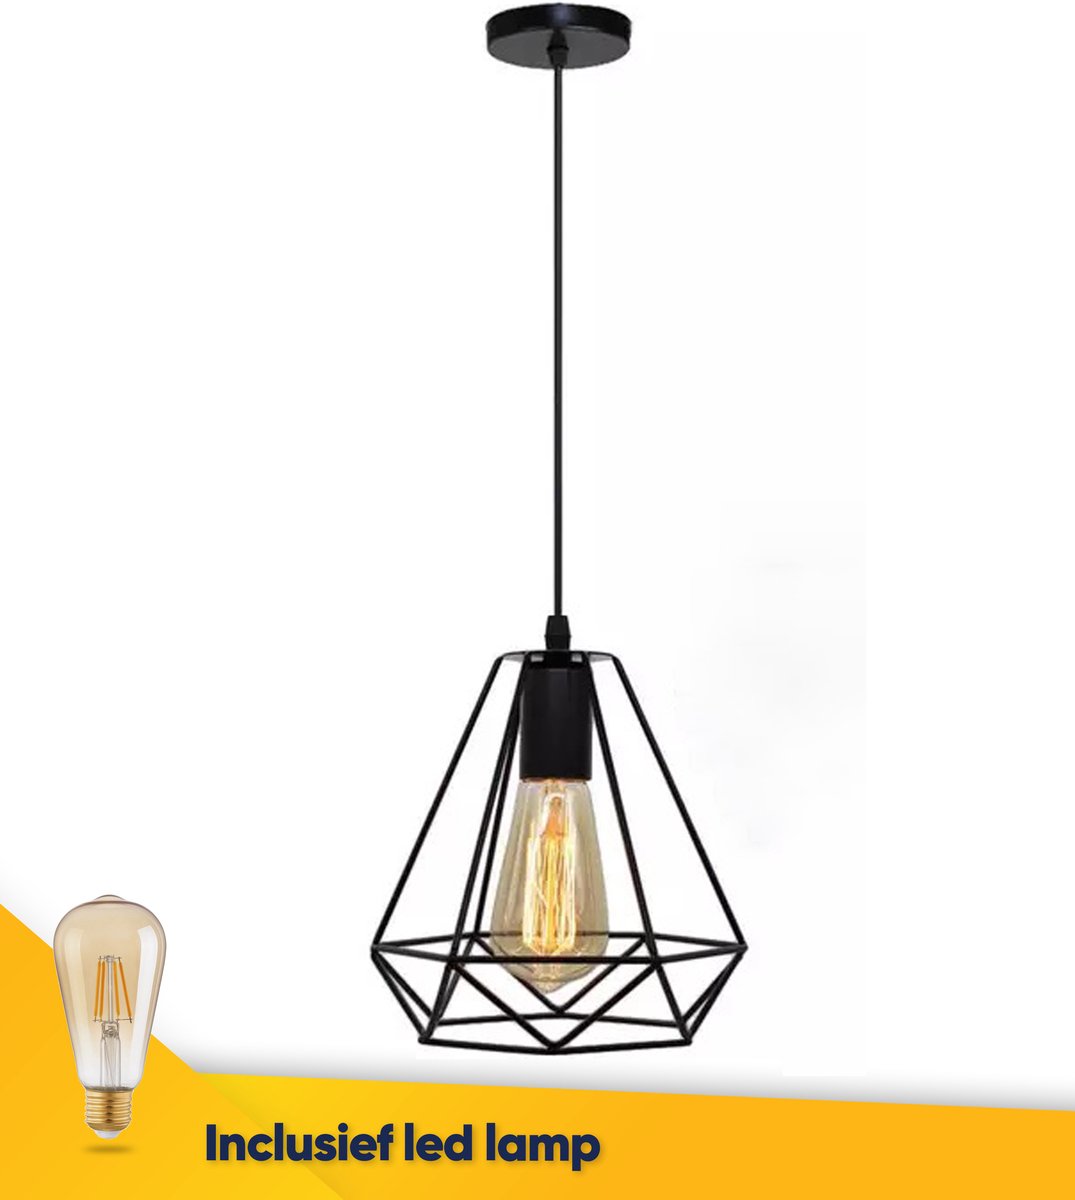 Hanglamp - led - retro - verlichting - plafonniere - inclusief - led lamp - vintage - industrieel - zwart - Ø20cm - wandlamp - e27